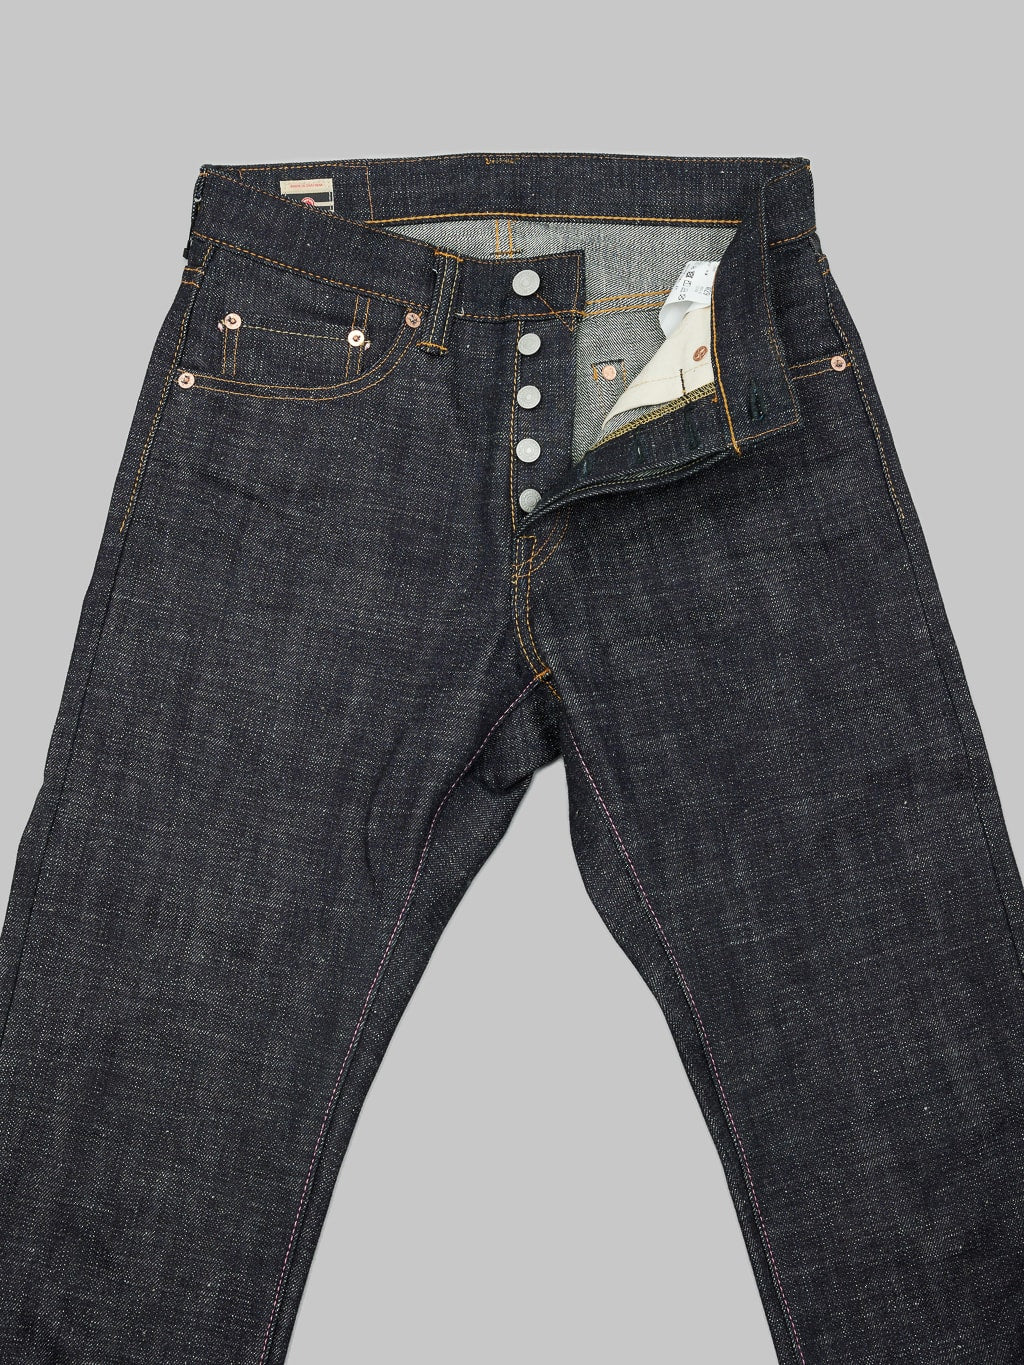 momotaro jeans 0605 82 16oz texture denim natural tapered waist